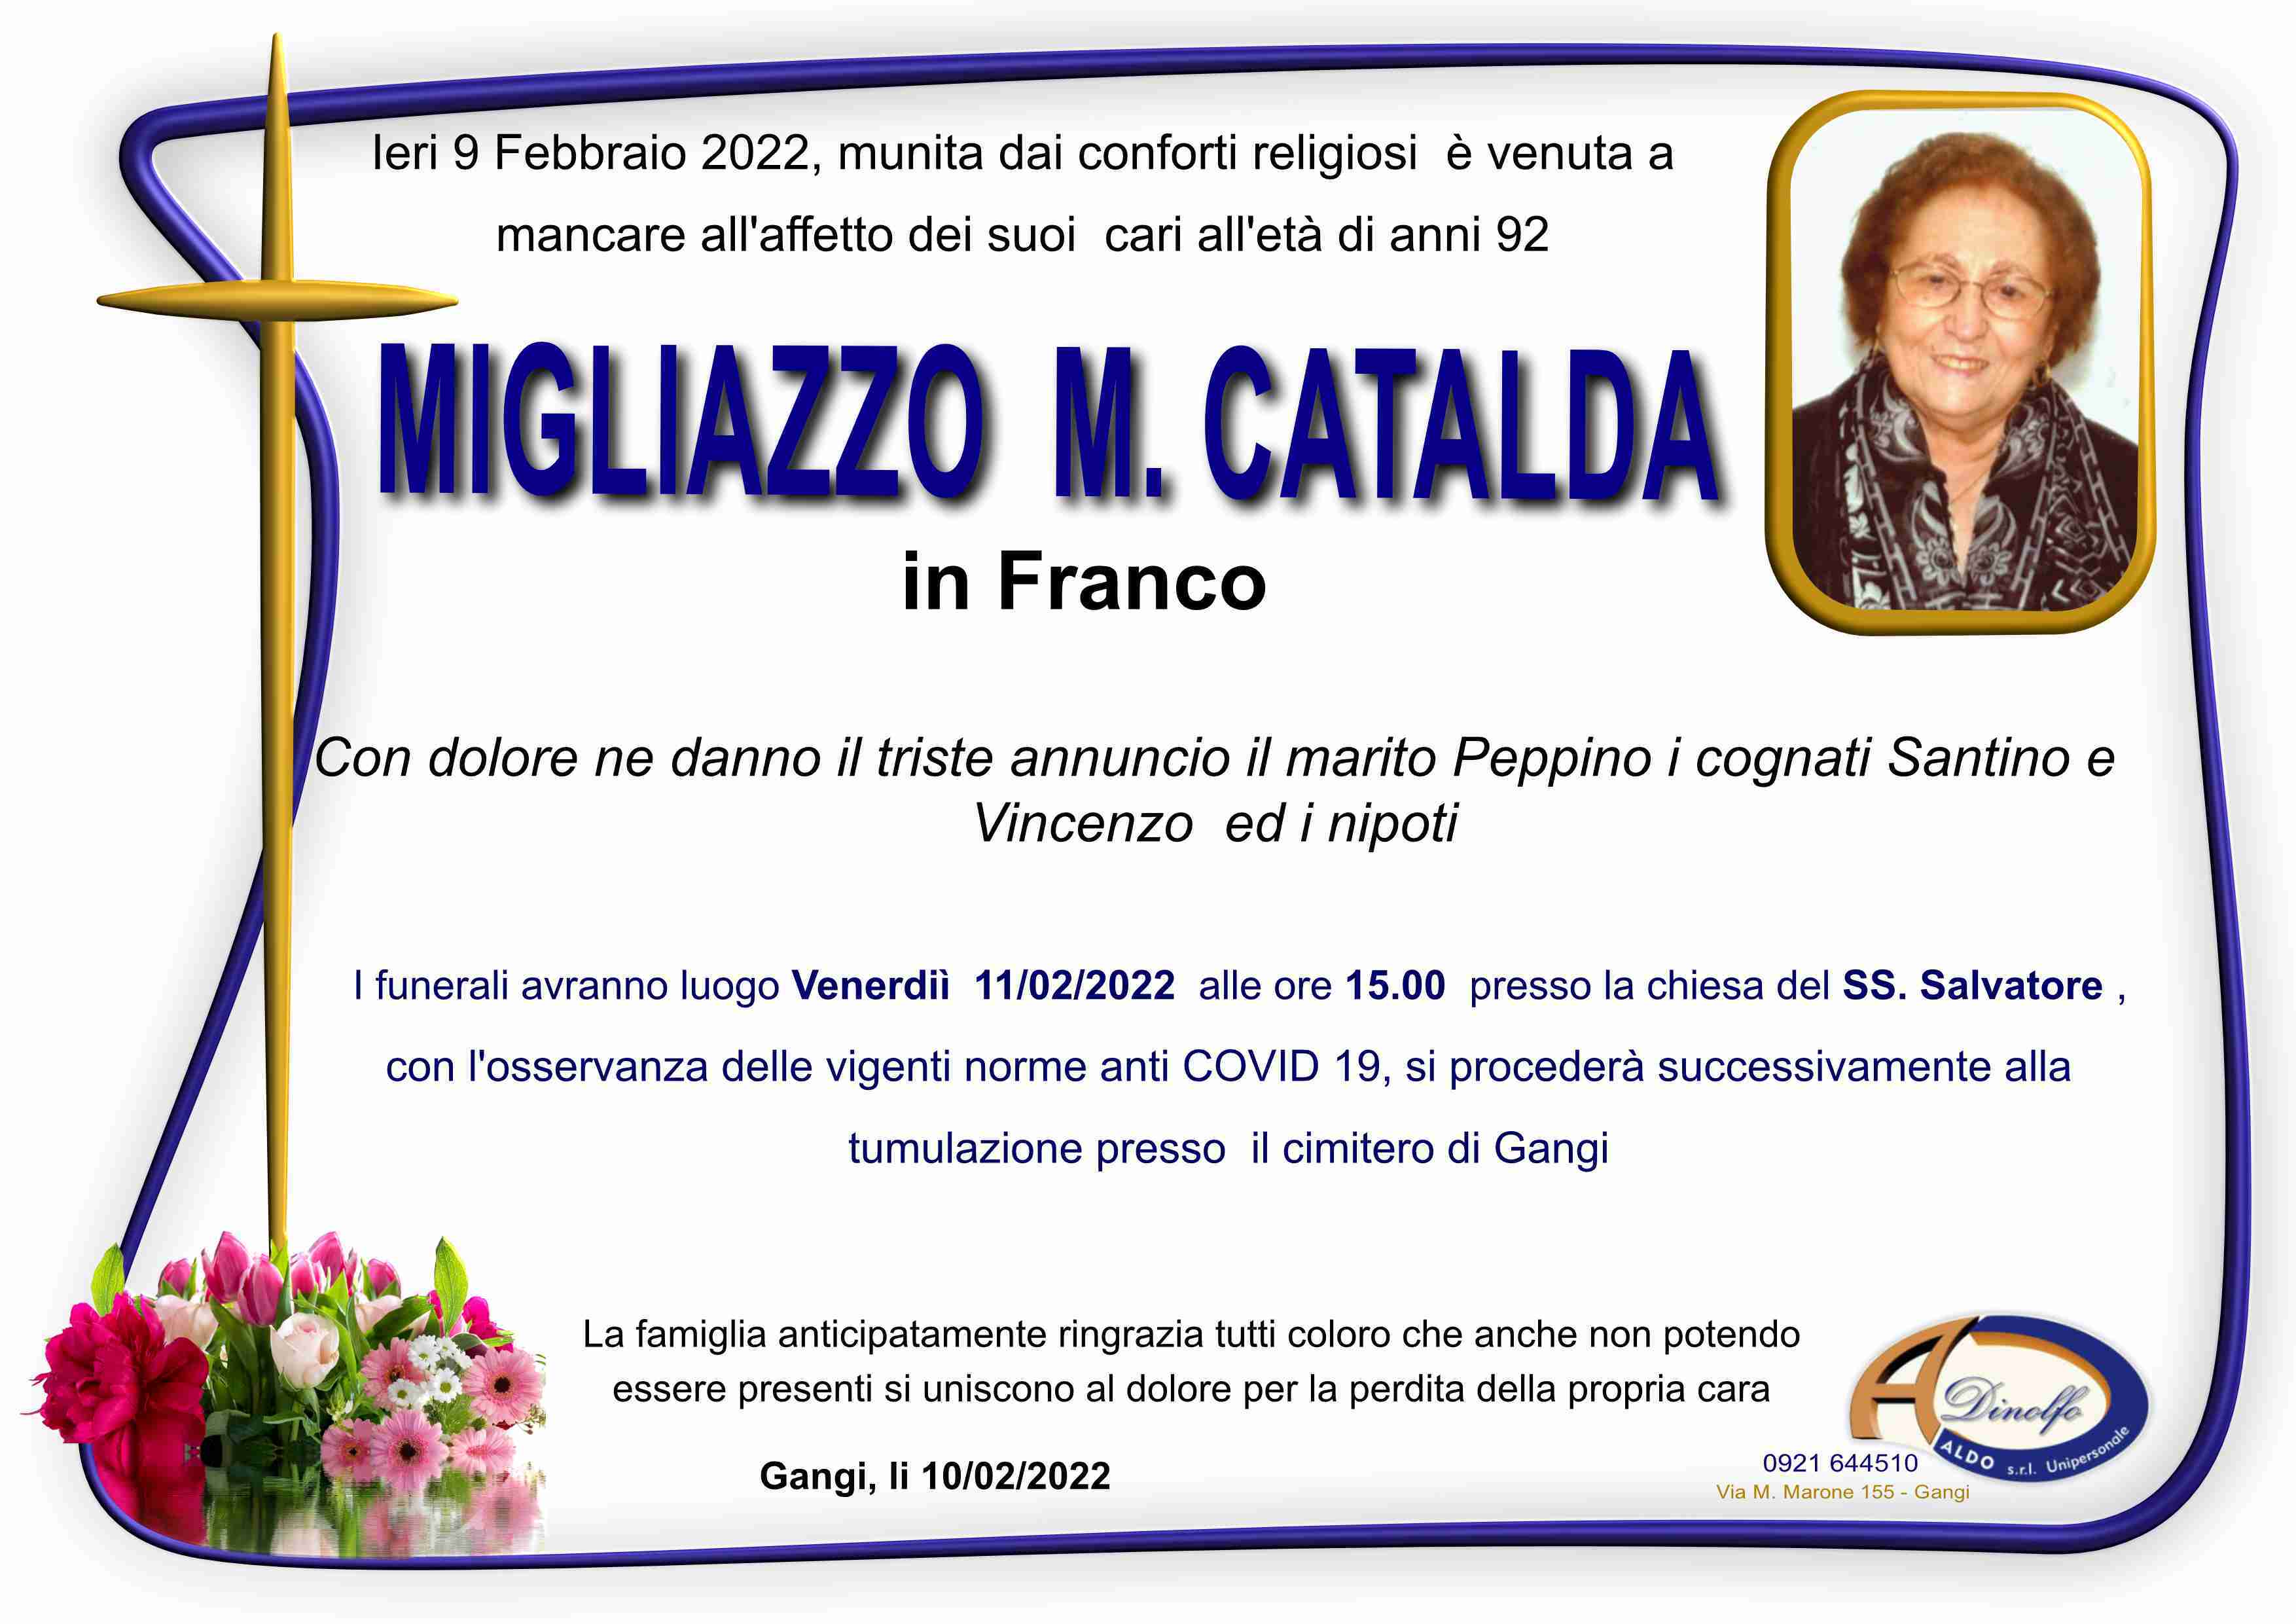 Maria Catalda Migliazzo